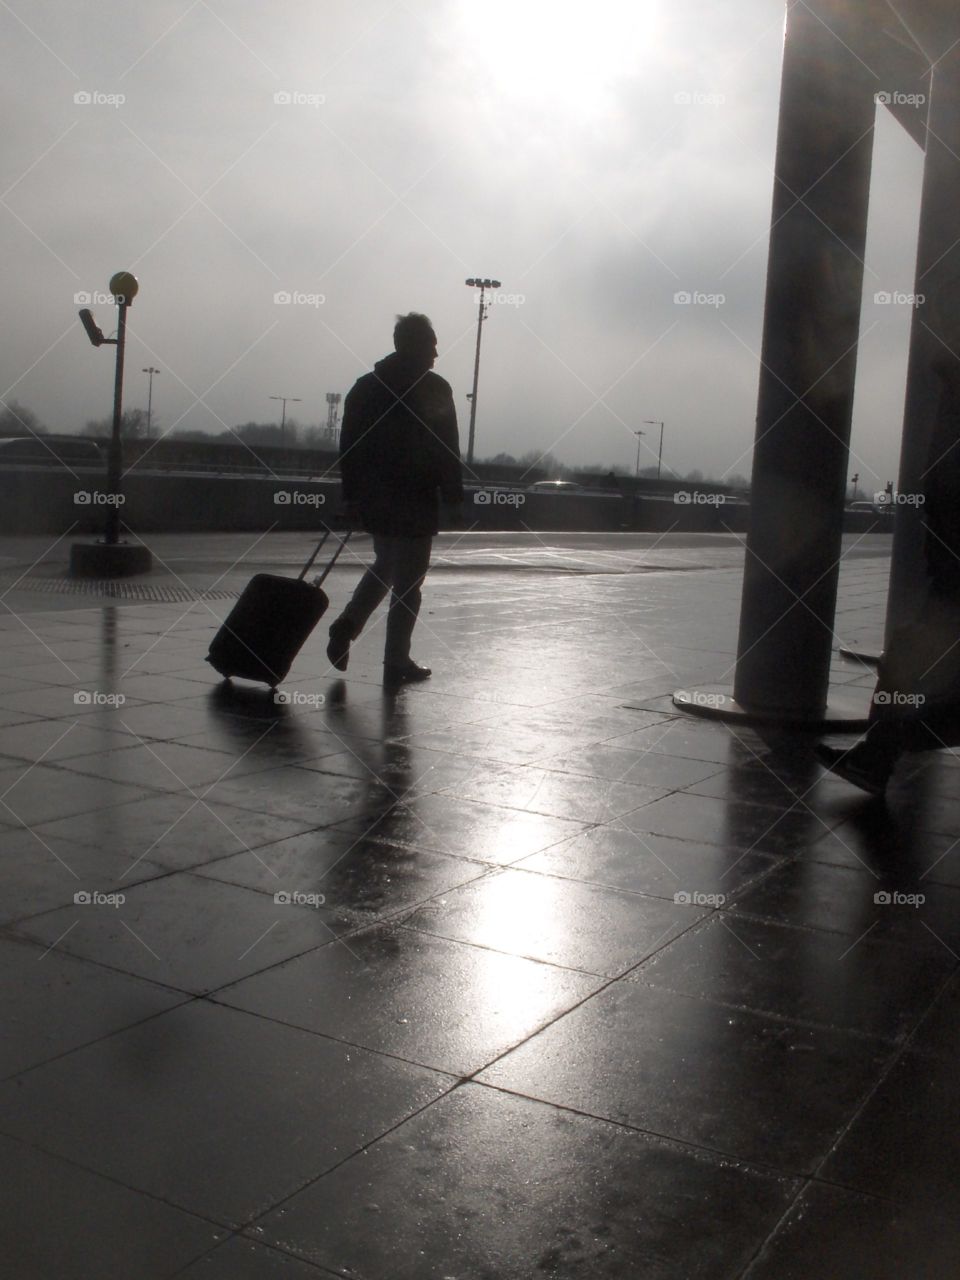 man walking into shiny spot on pavement on rainy day.